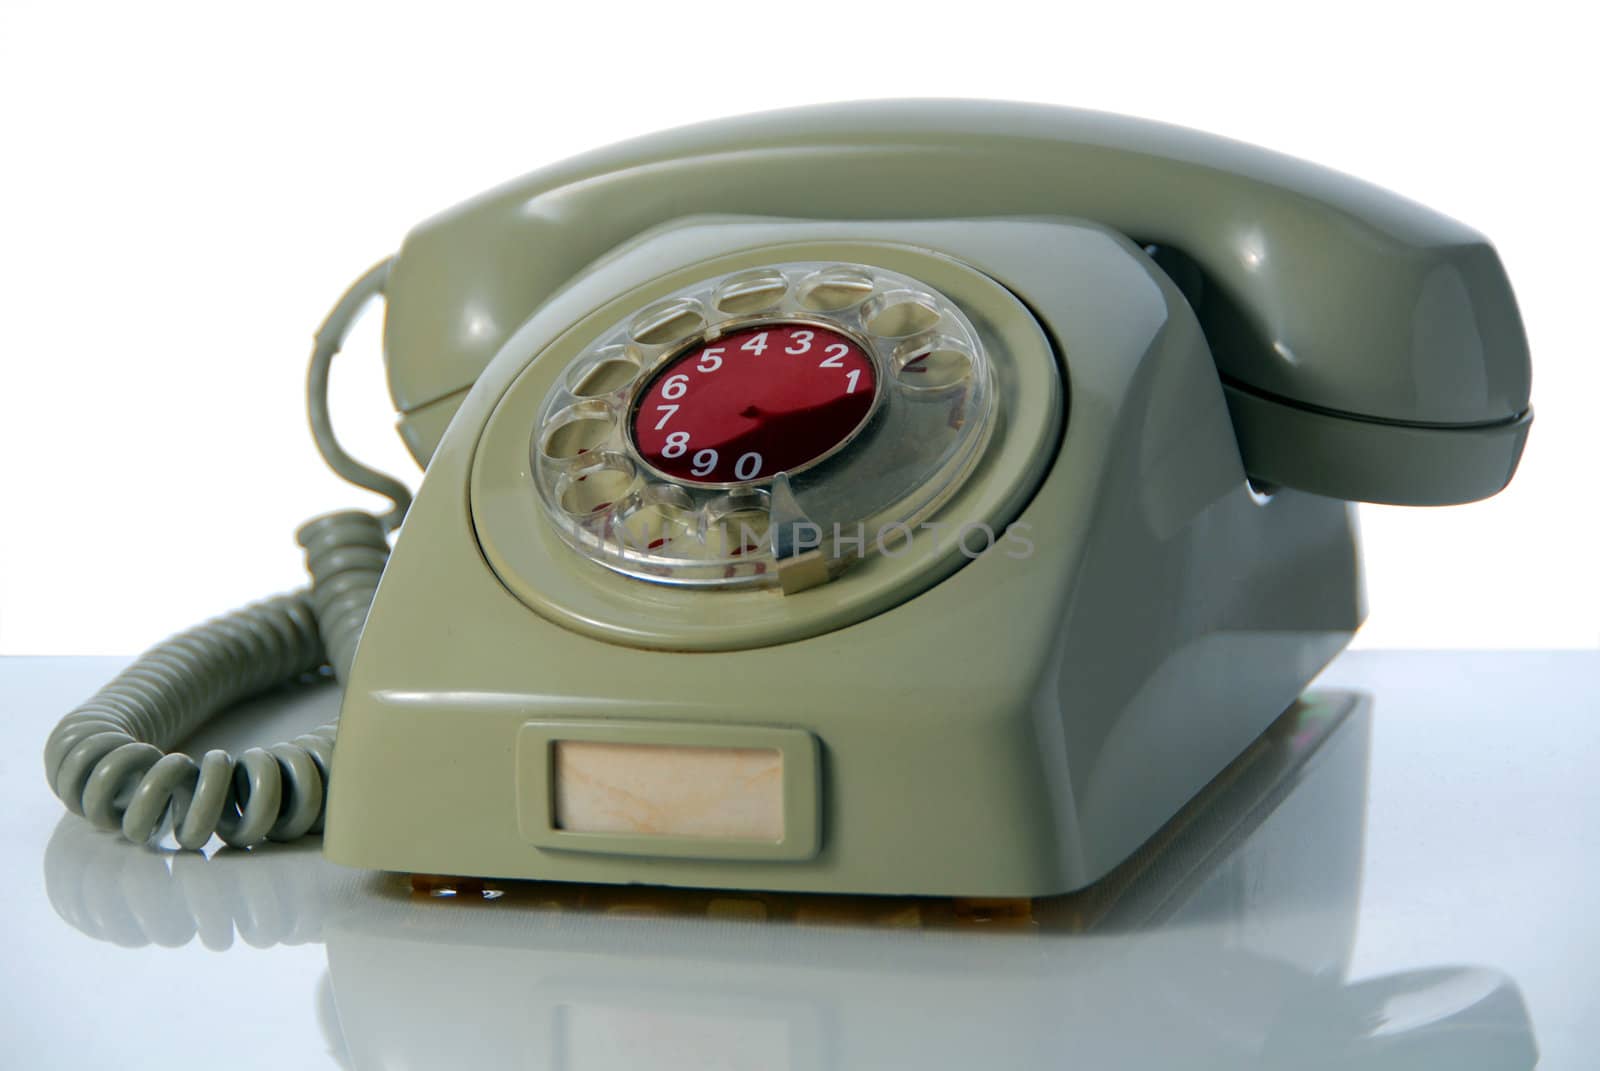 Retro telephone by Gjermund